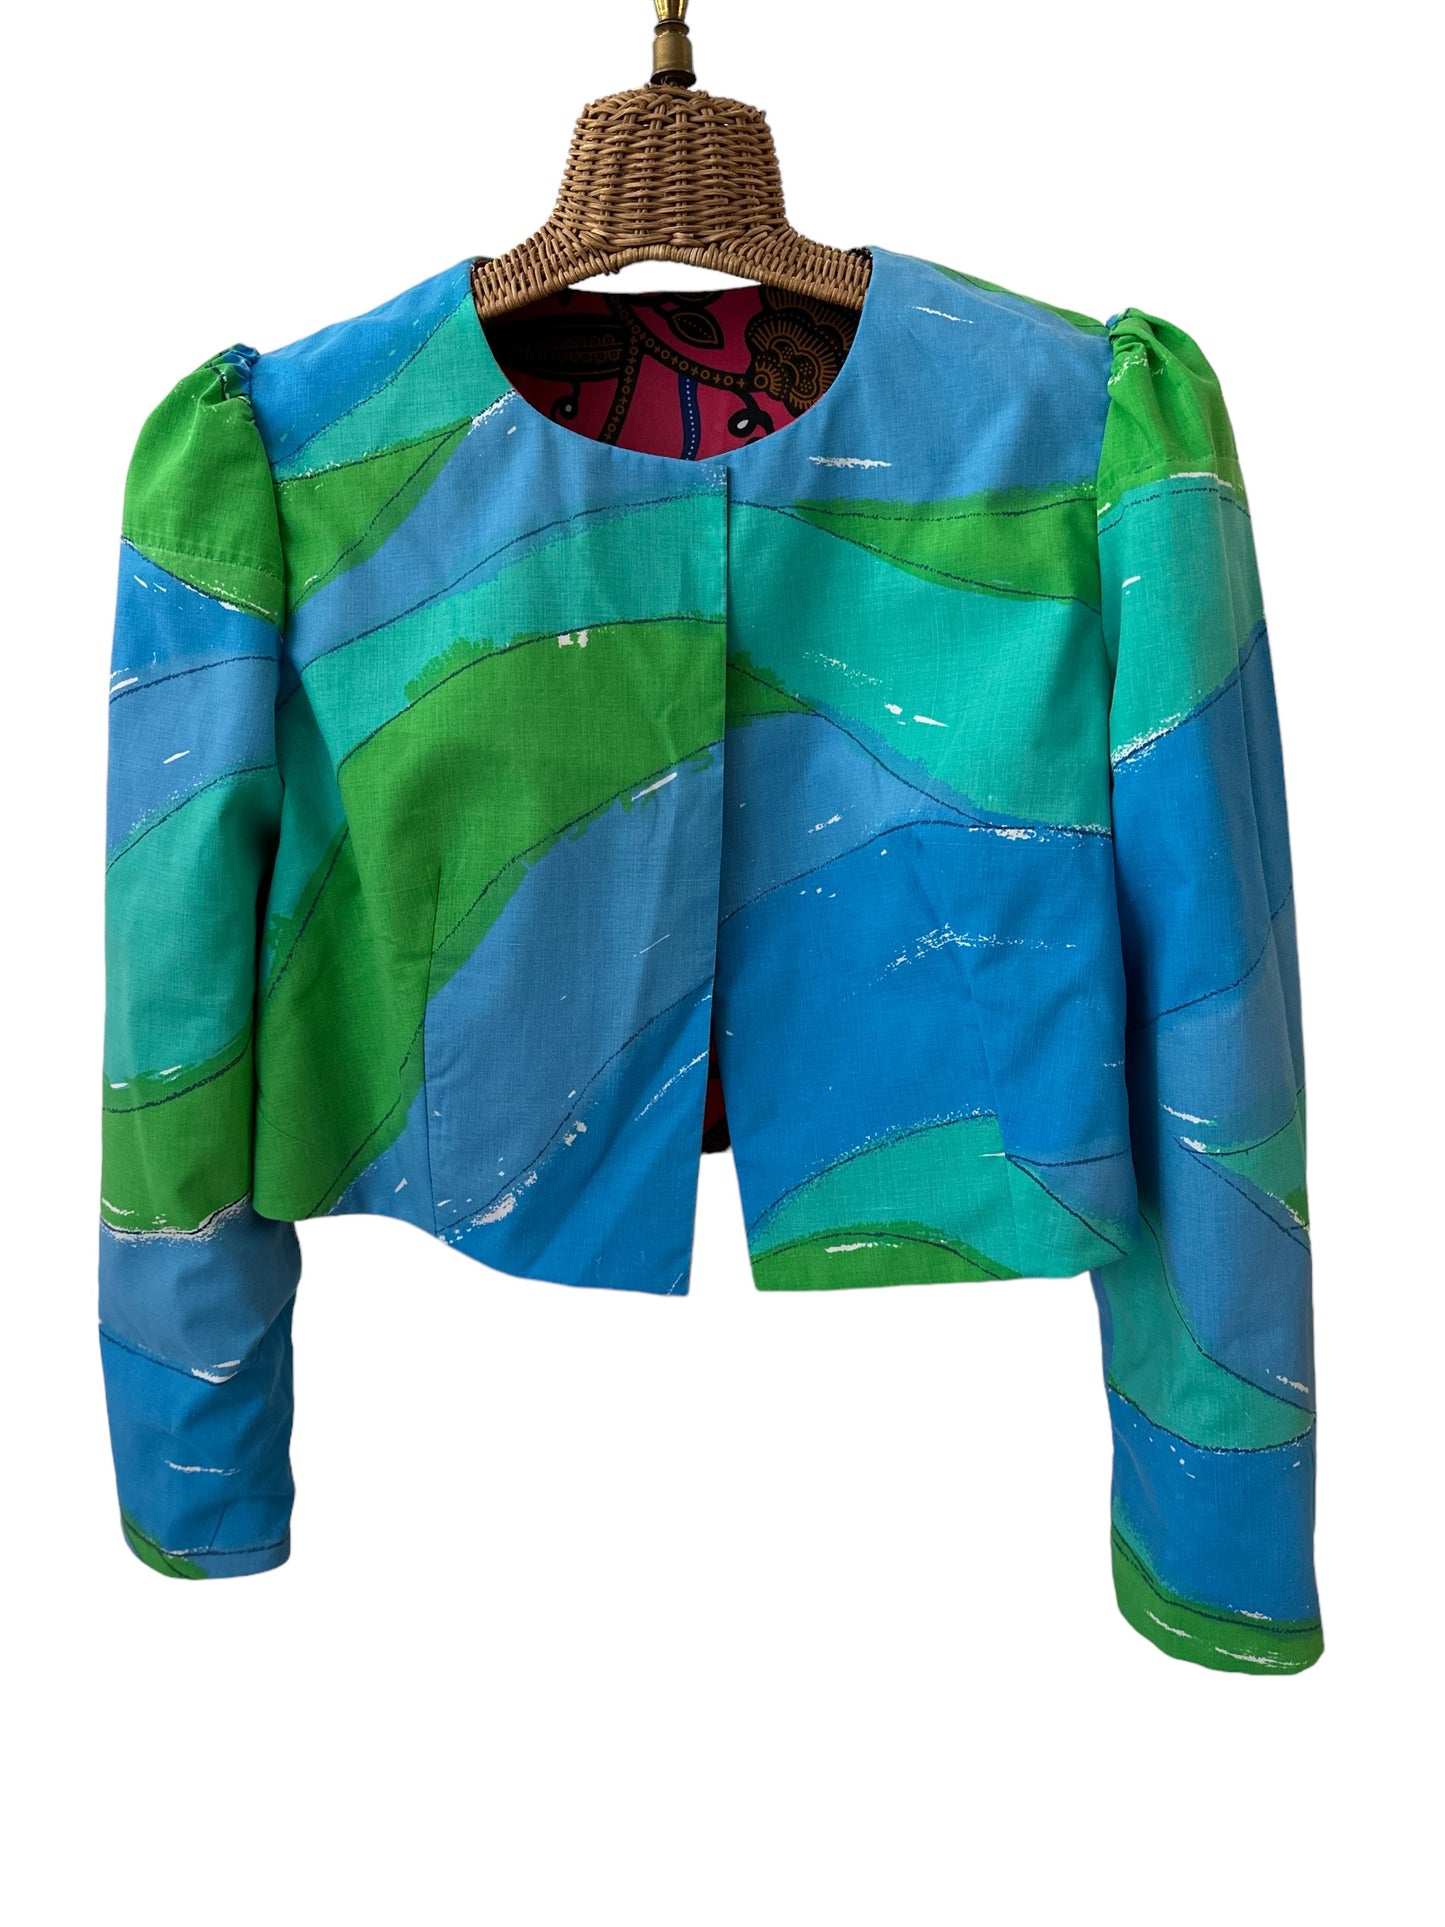 Mila jacket in Fuschia Fauna/Outside the Lines